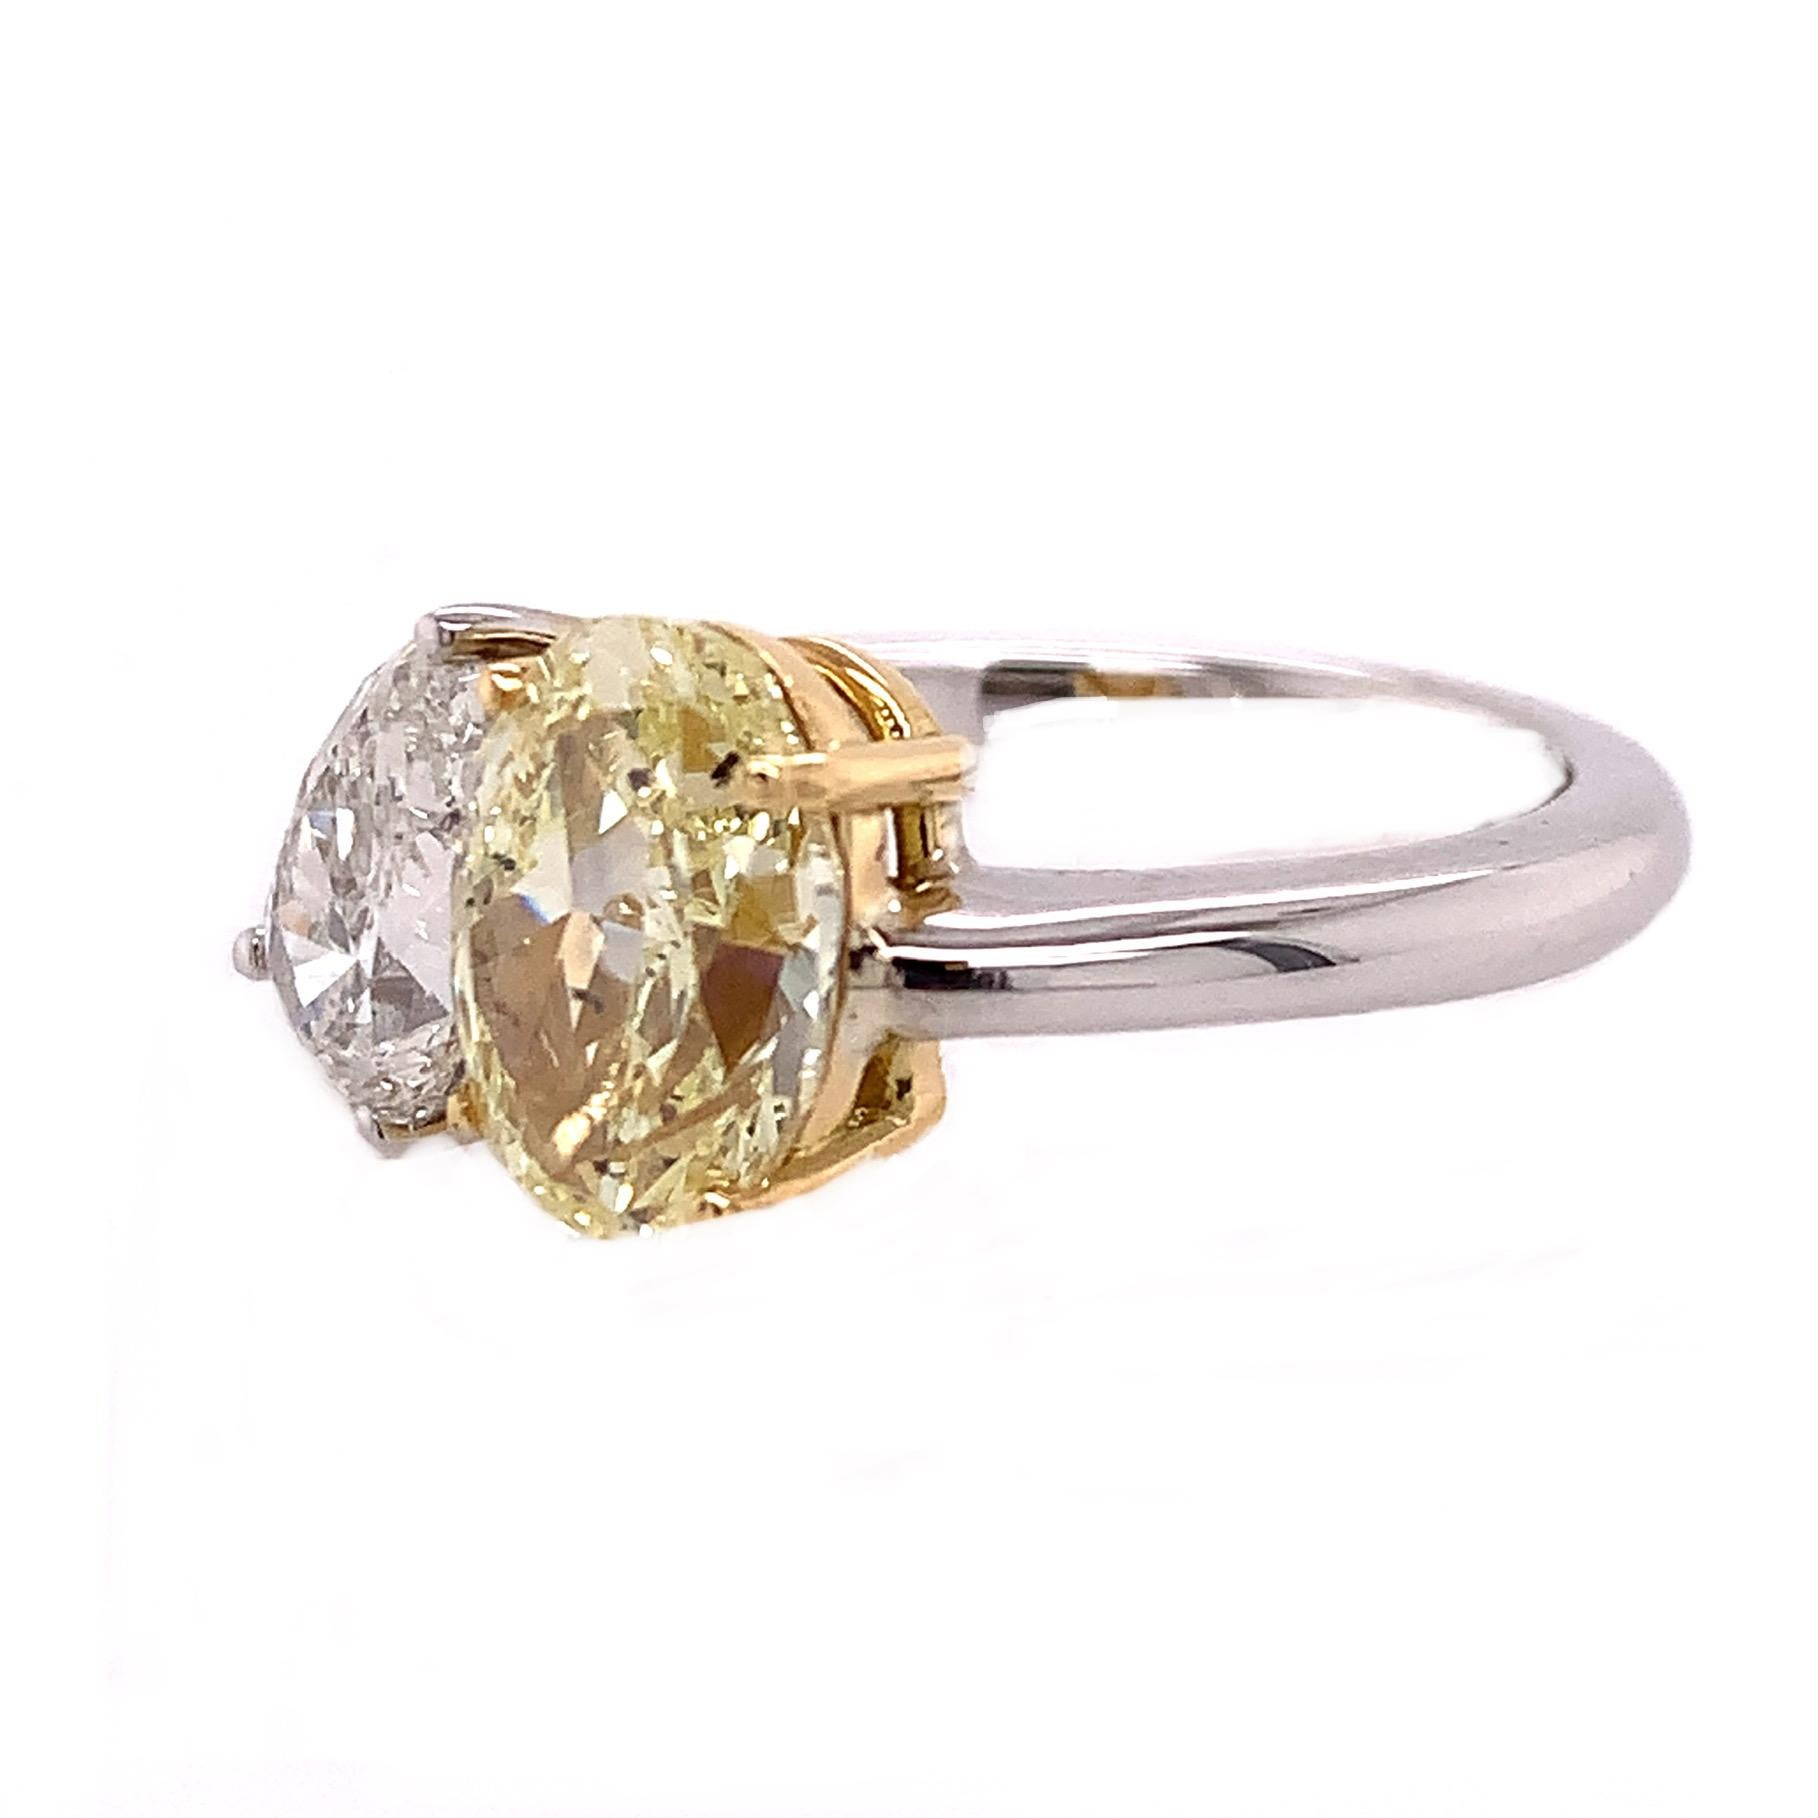 18K White Gold
U.S size 6.
Fancy yellow Diamond: 2.36ct total weight.
Diamond: 1.11ct total weight, G-H/SI stone.
